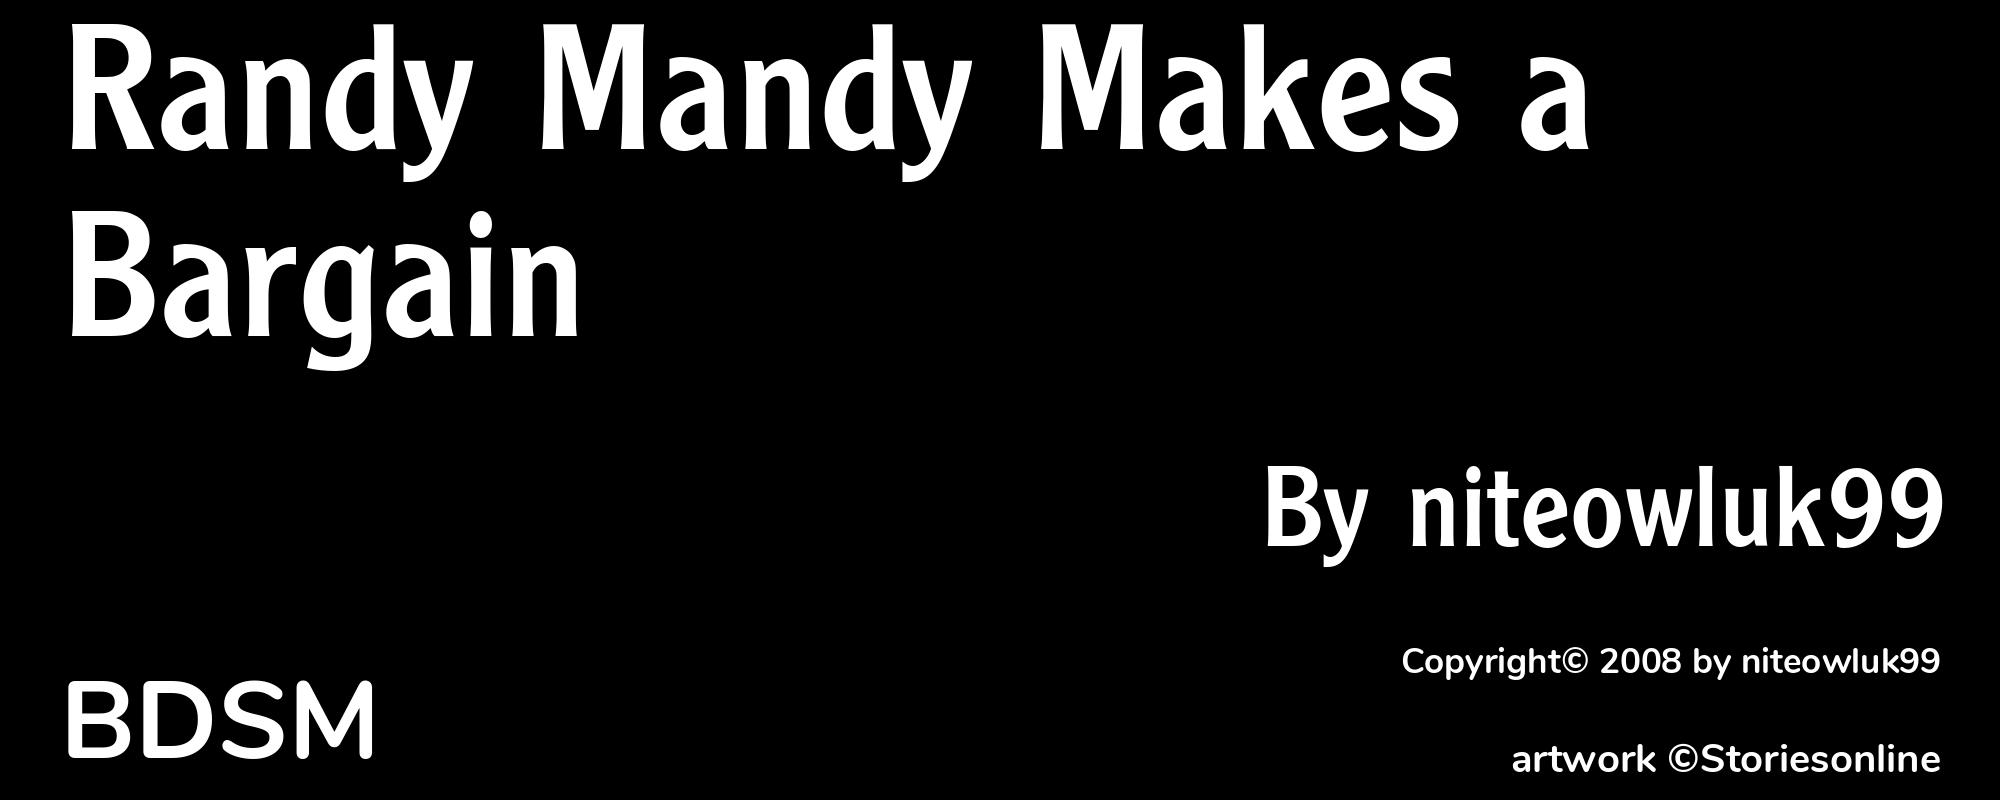 Randy Mandy Makes a Bargain - Cover